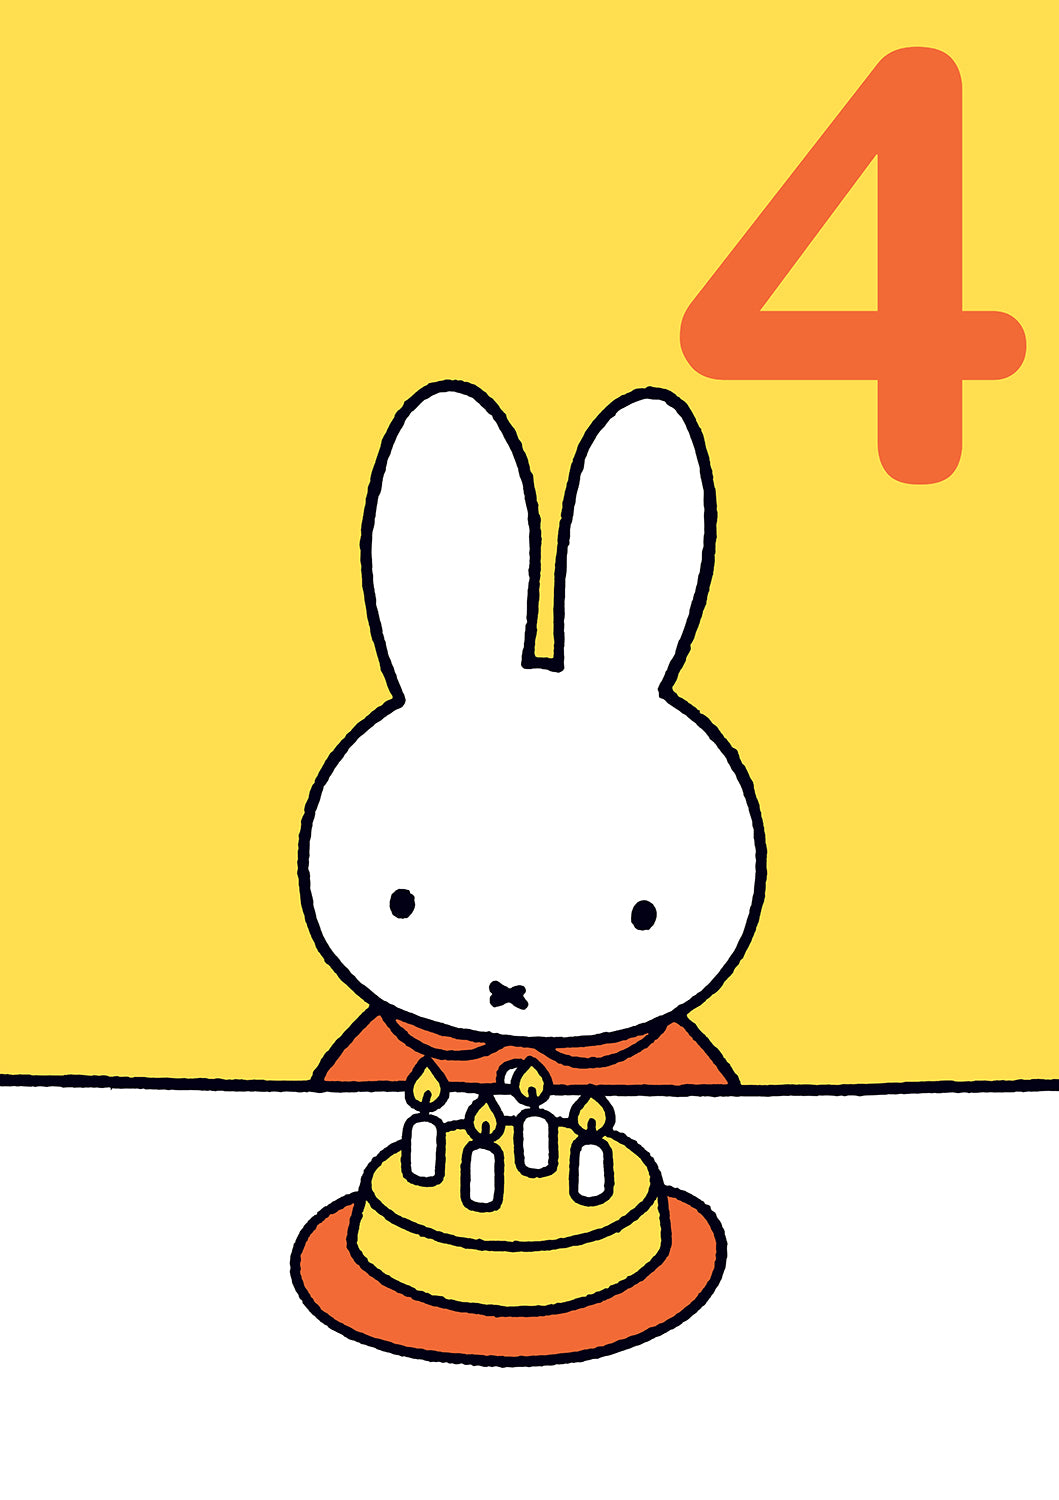 Greeting Card: Miffy - Age 4